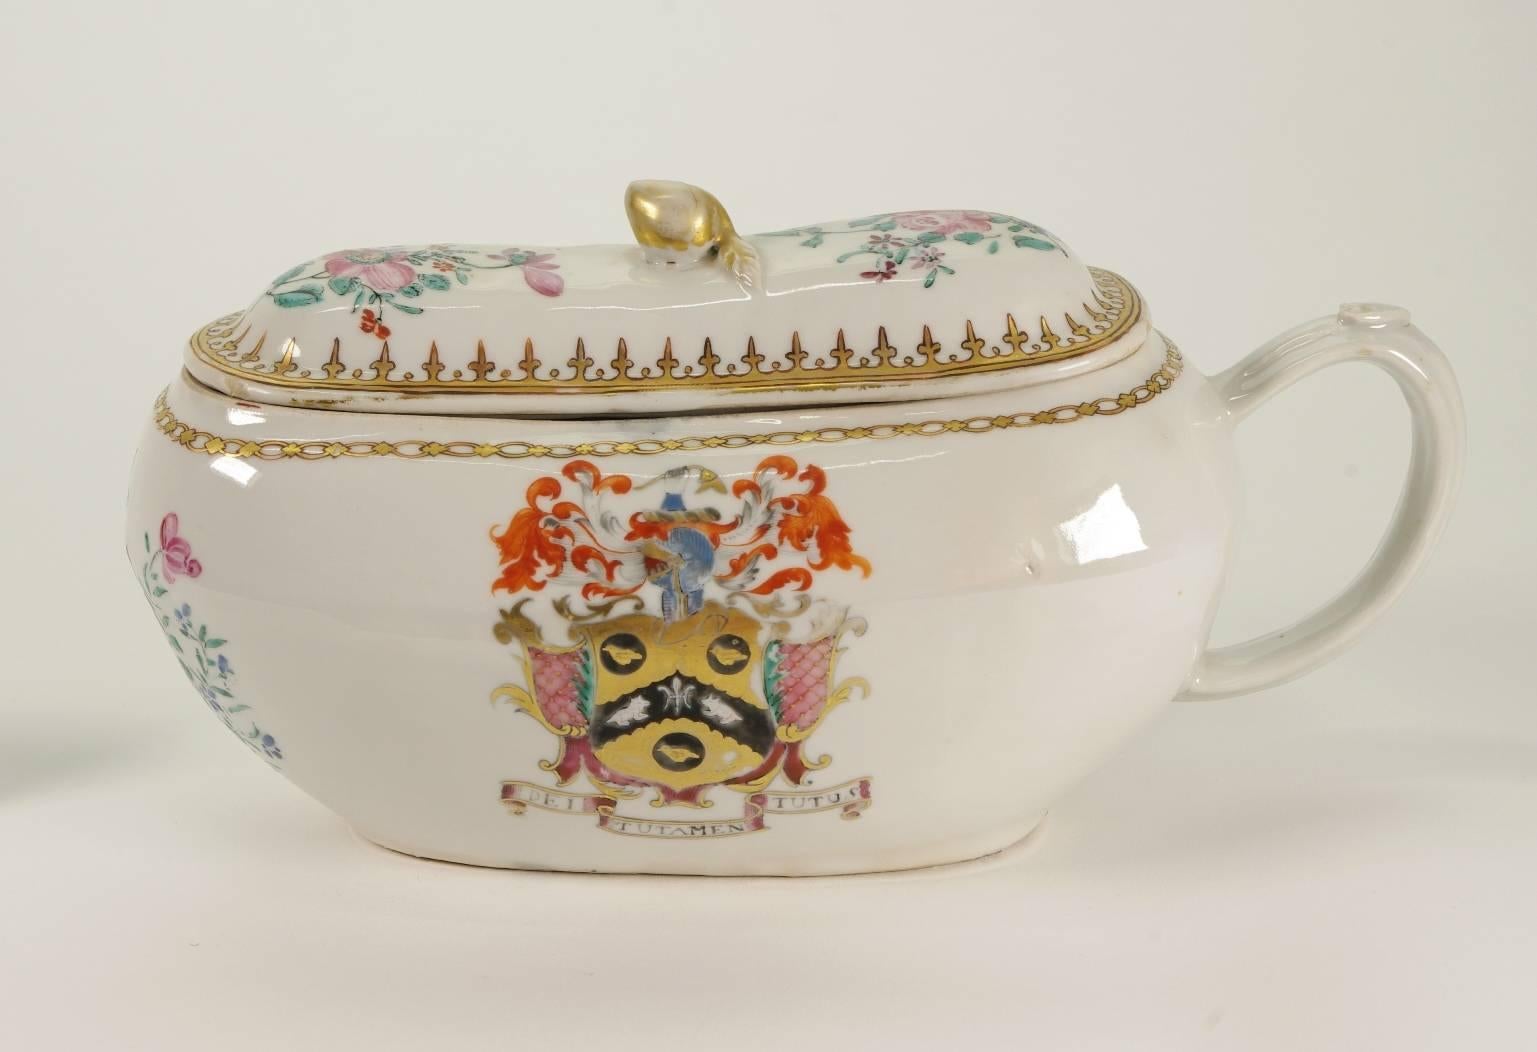 Porcelain Chinese Export Armorial Bourdaloue, c. 1750